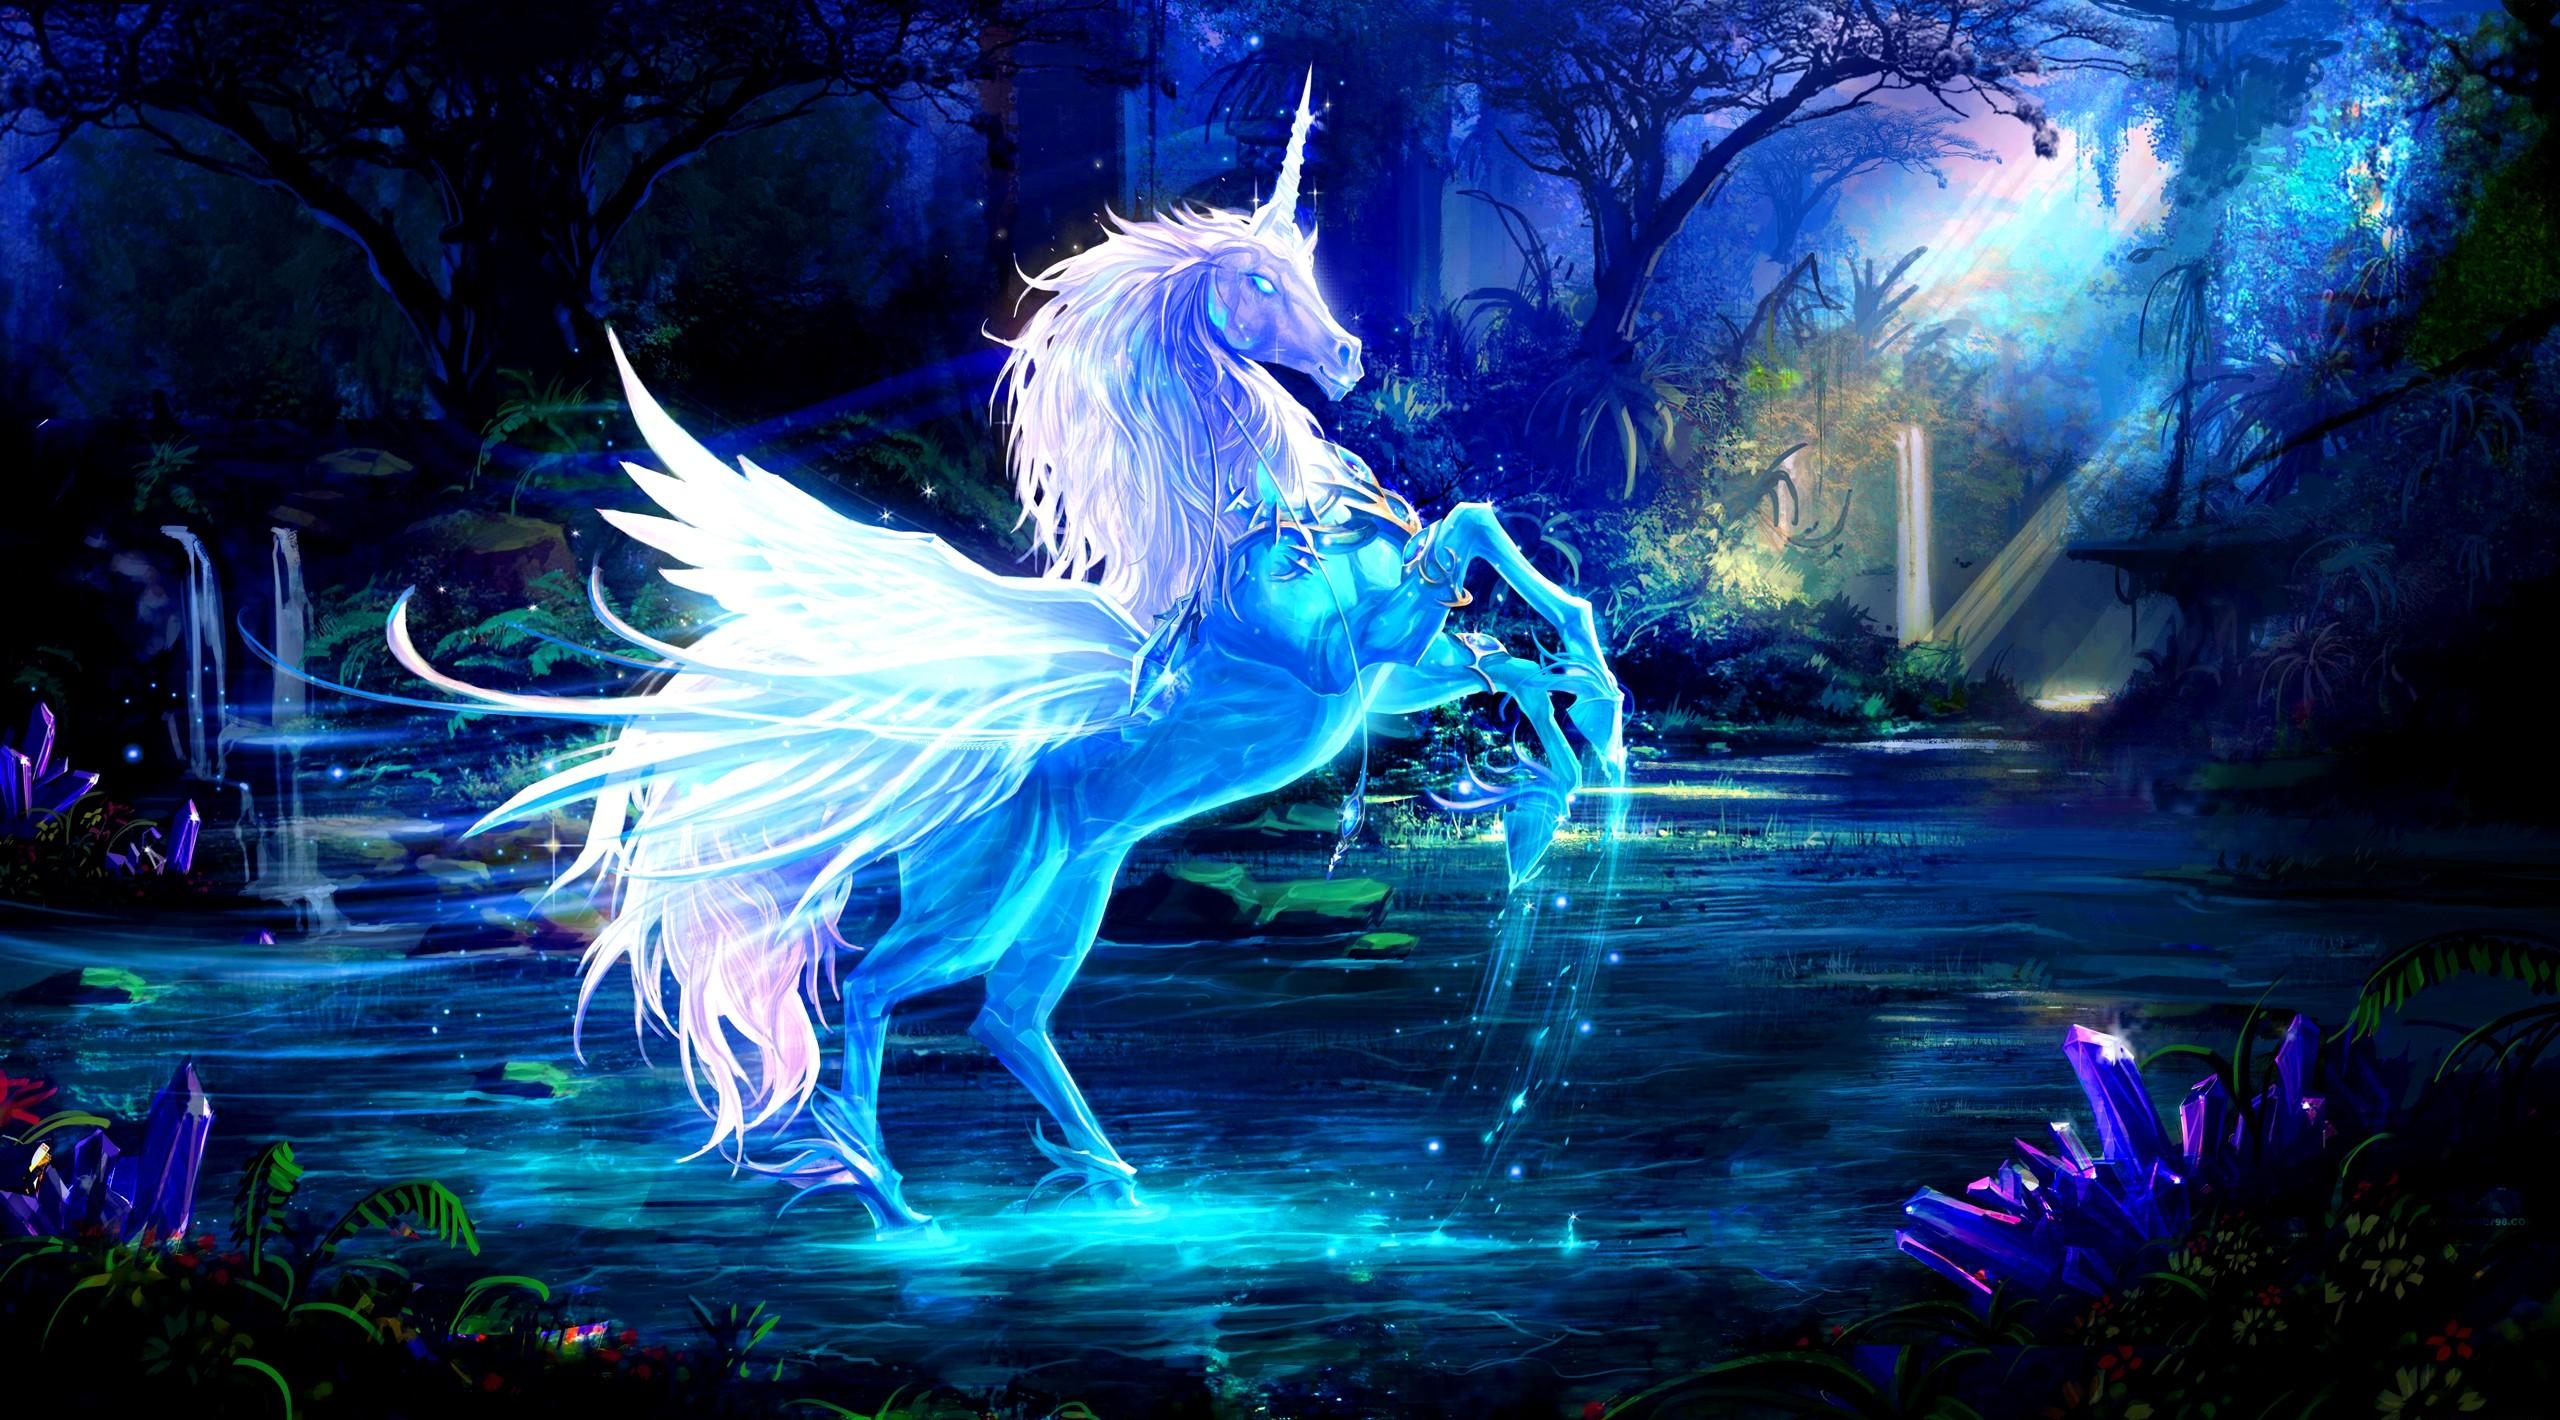 Free HD magic, water, fantasy, night, forest, unicorn